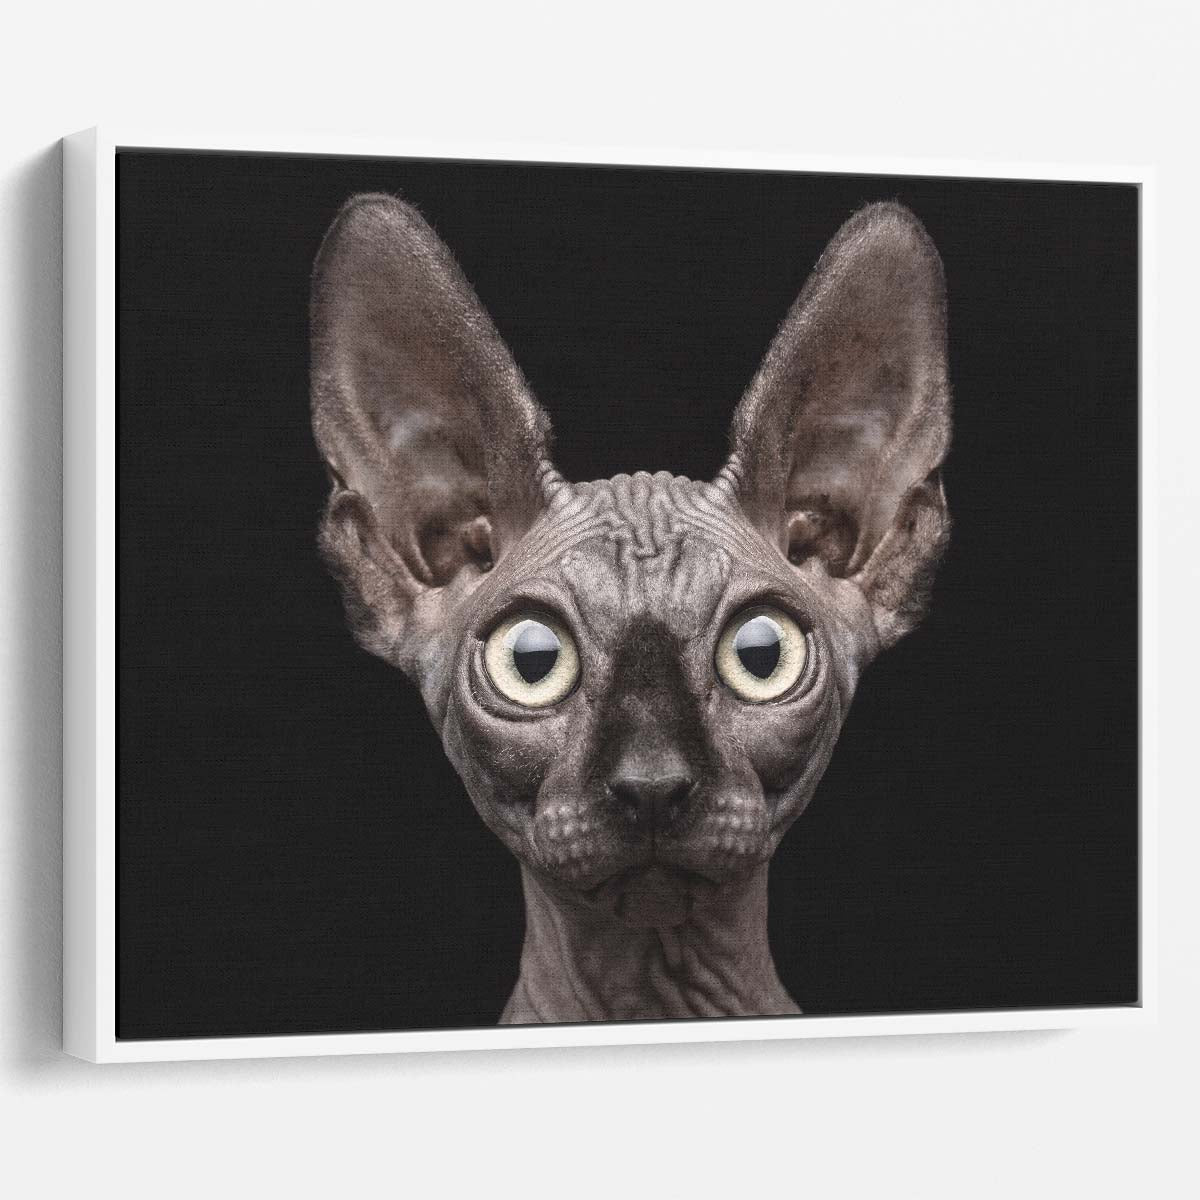 Sphynx Cat Portrait Surprised Gaze, Studio Shot Wall Art